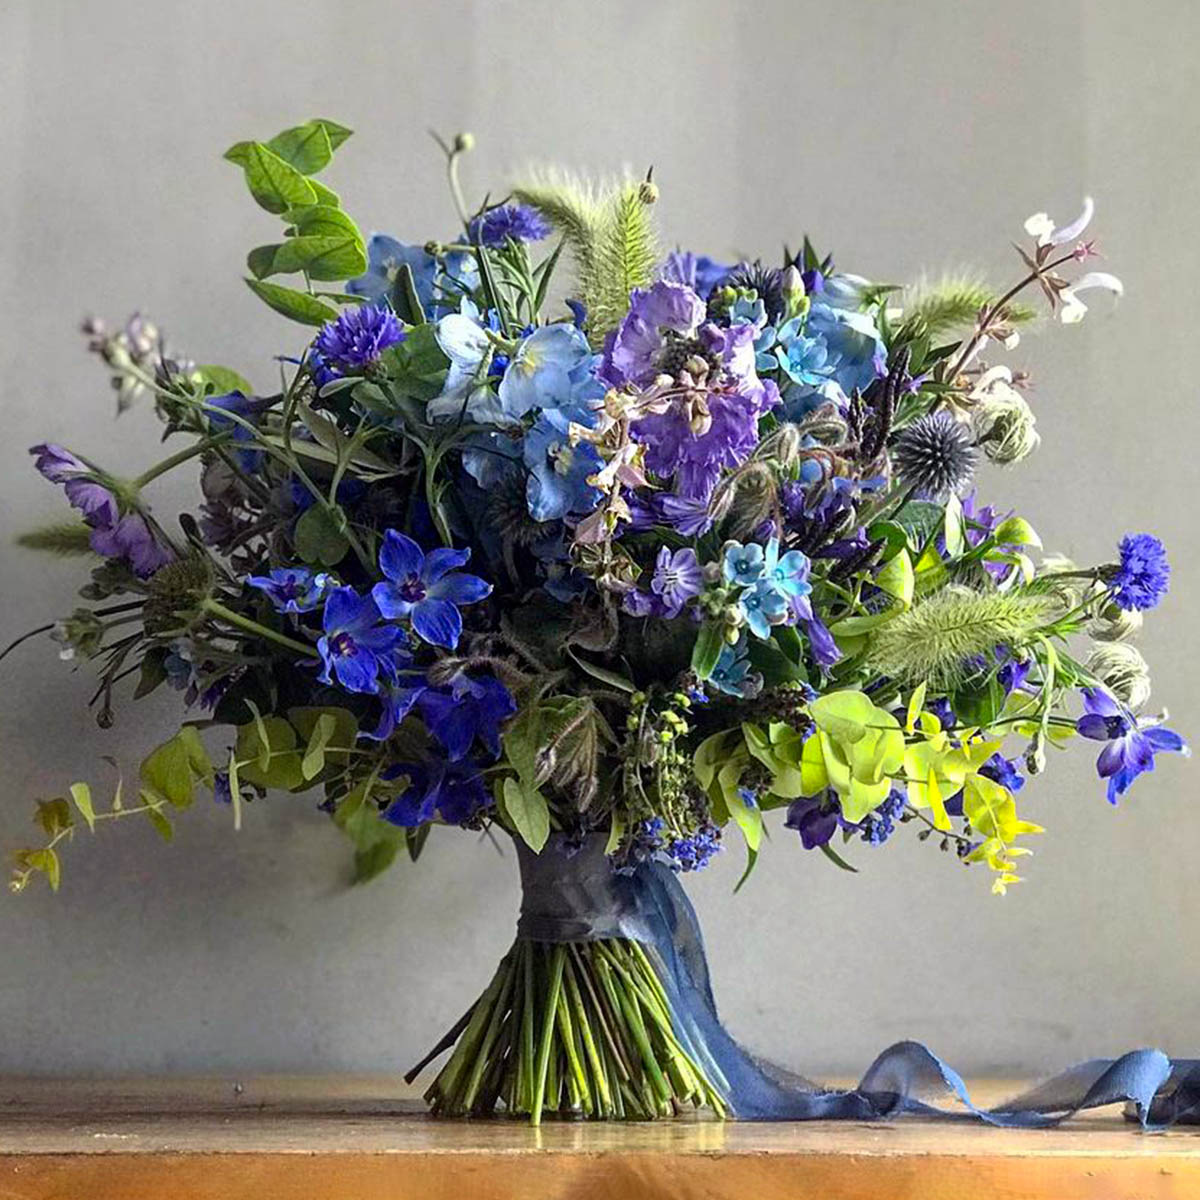 Blue Bouquets for Boys - feature square - on Thursd